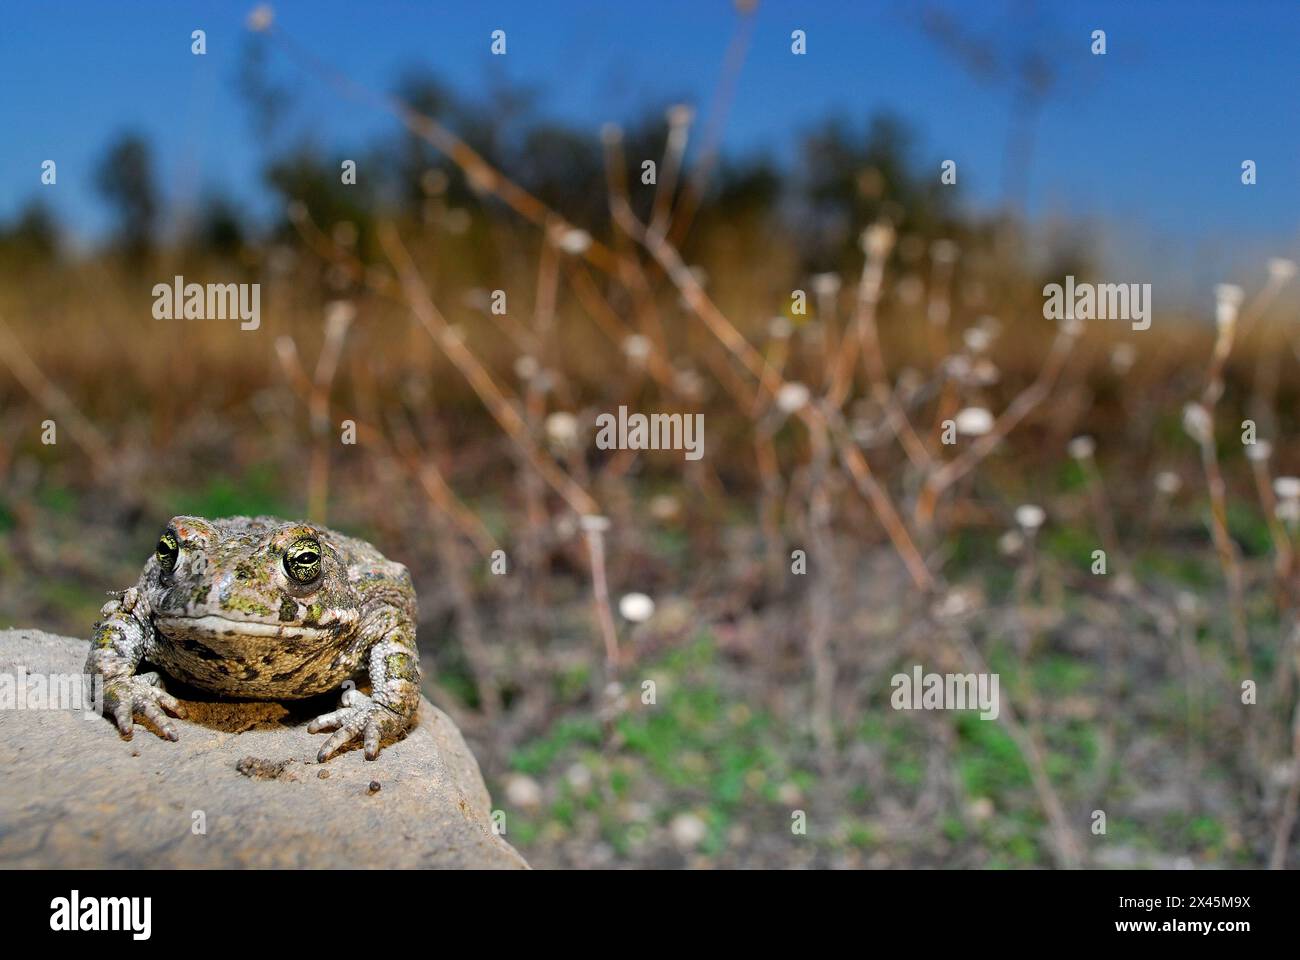 Natterjack toad (Epidalea calamita) in Valdemanco, Madrid, Spain Stock Photo